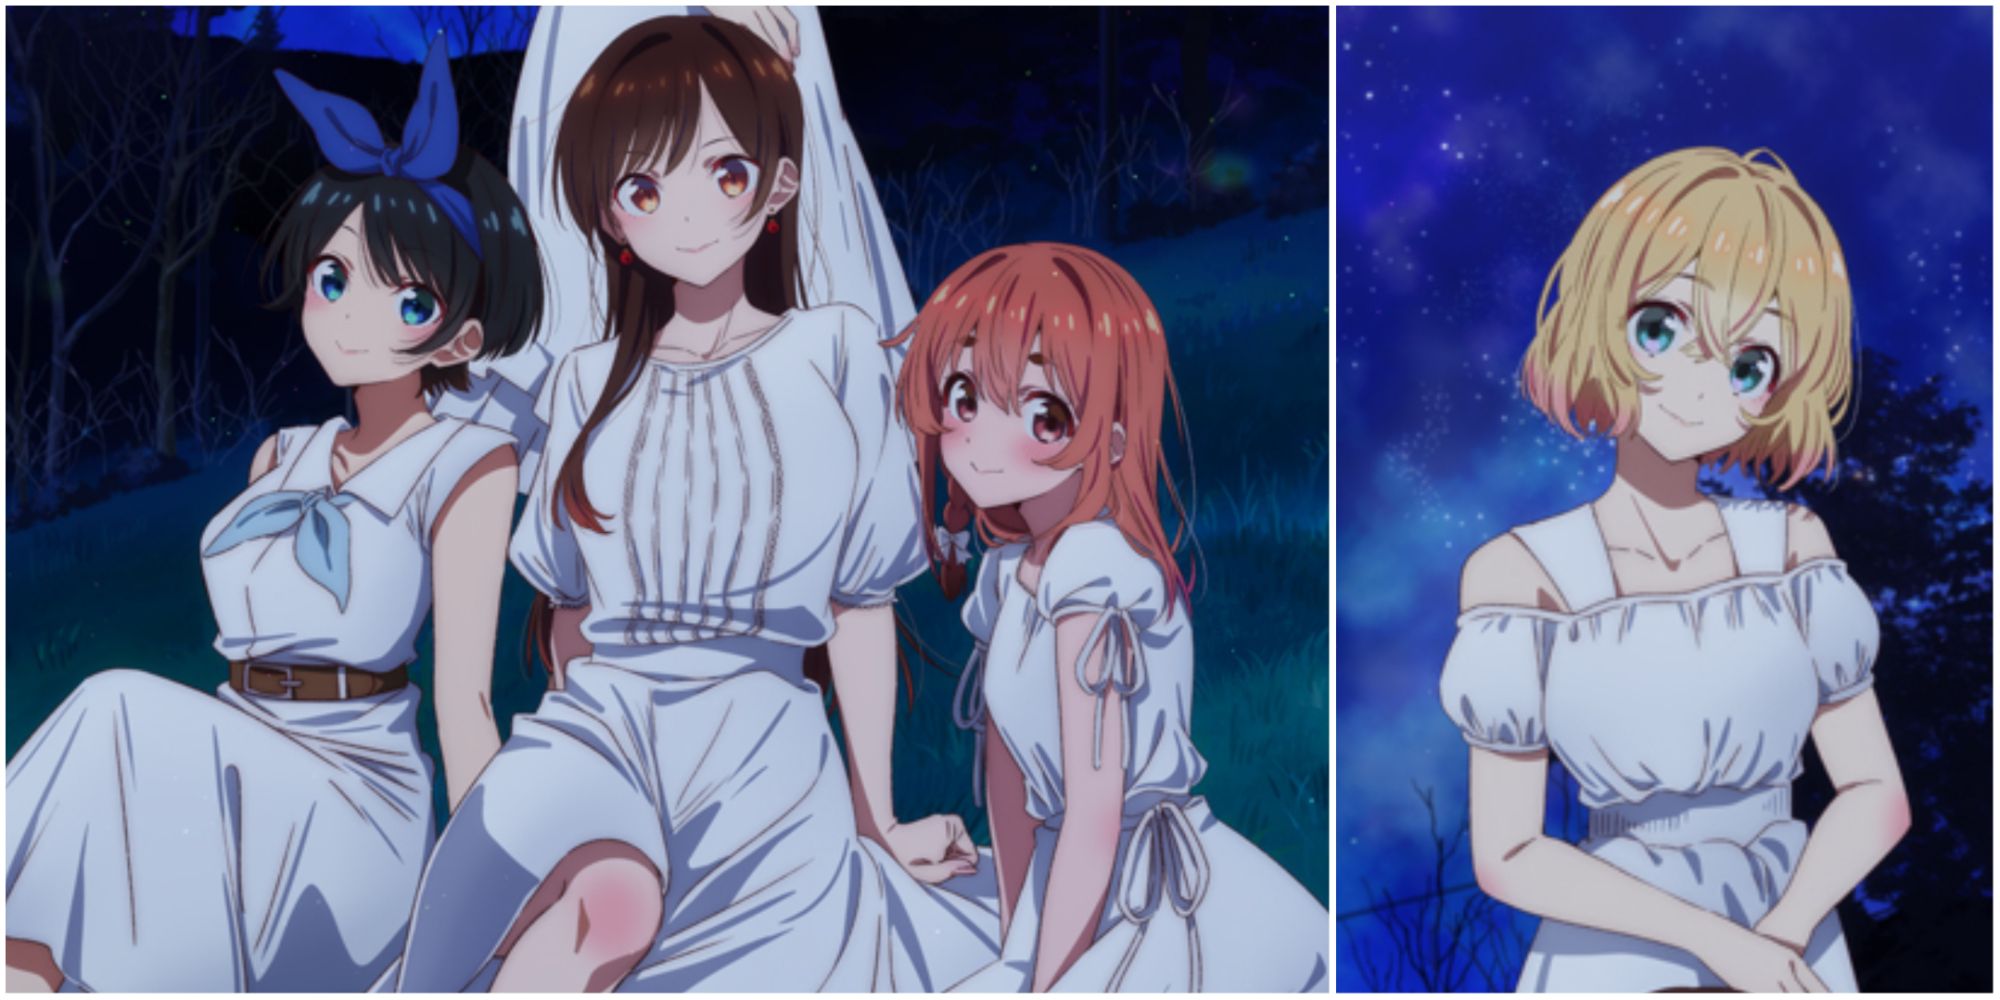 RentAGirlfriend Anime Promo Puts the Spotlight on Chizuru